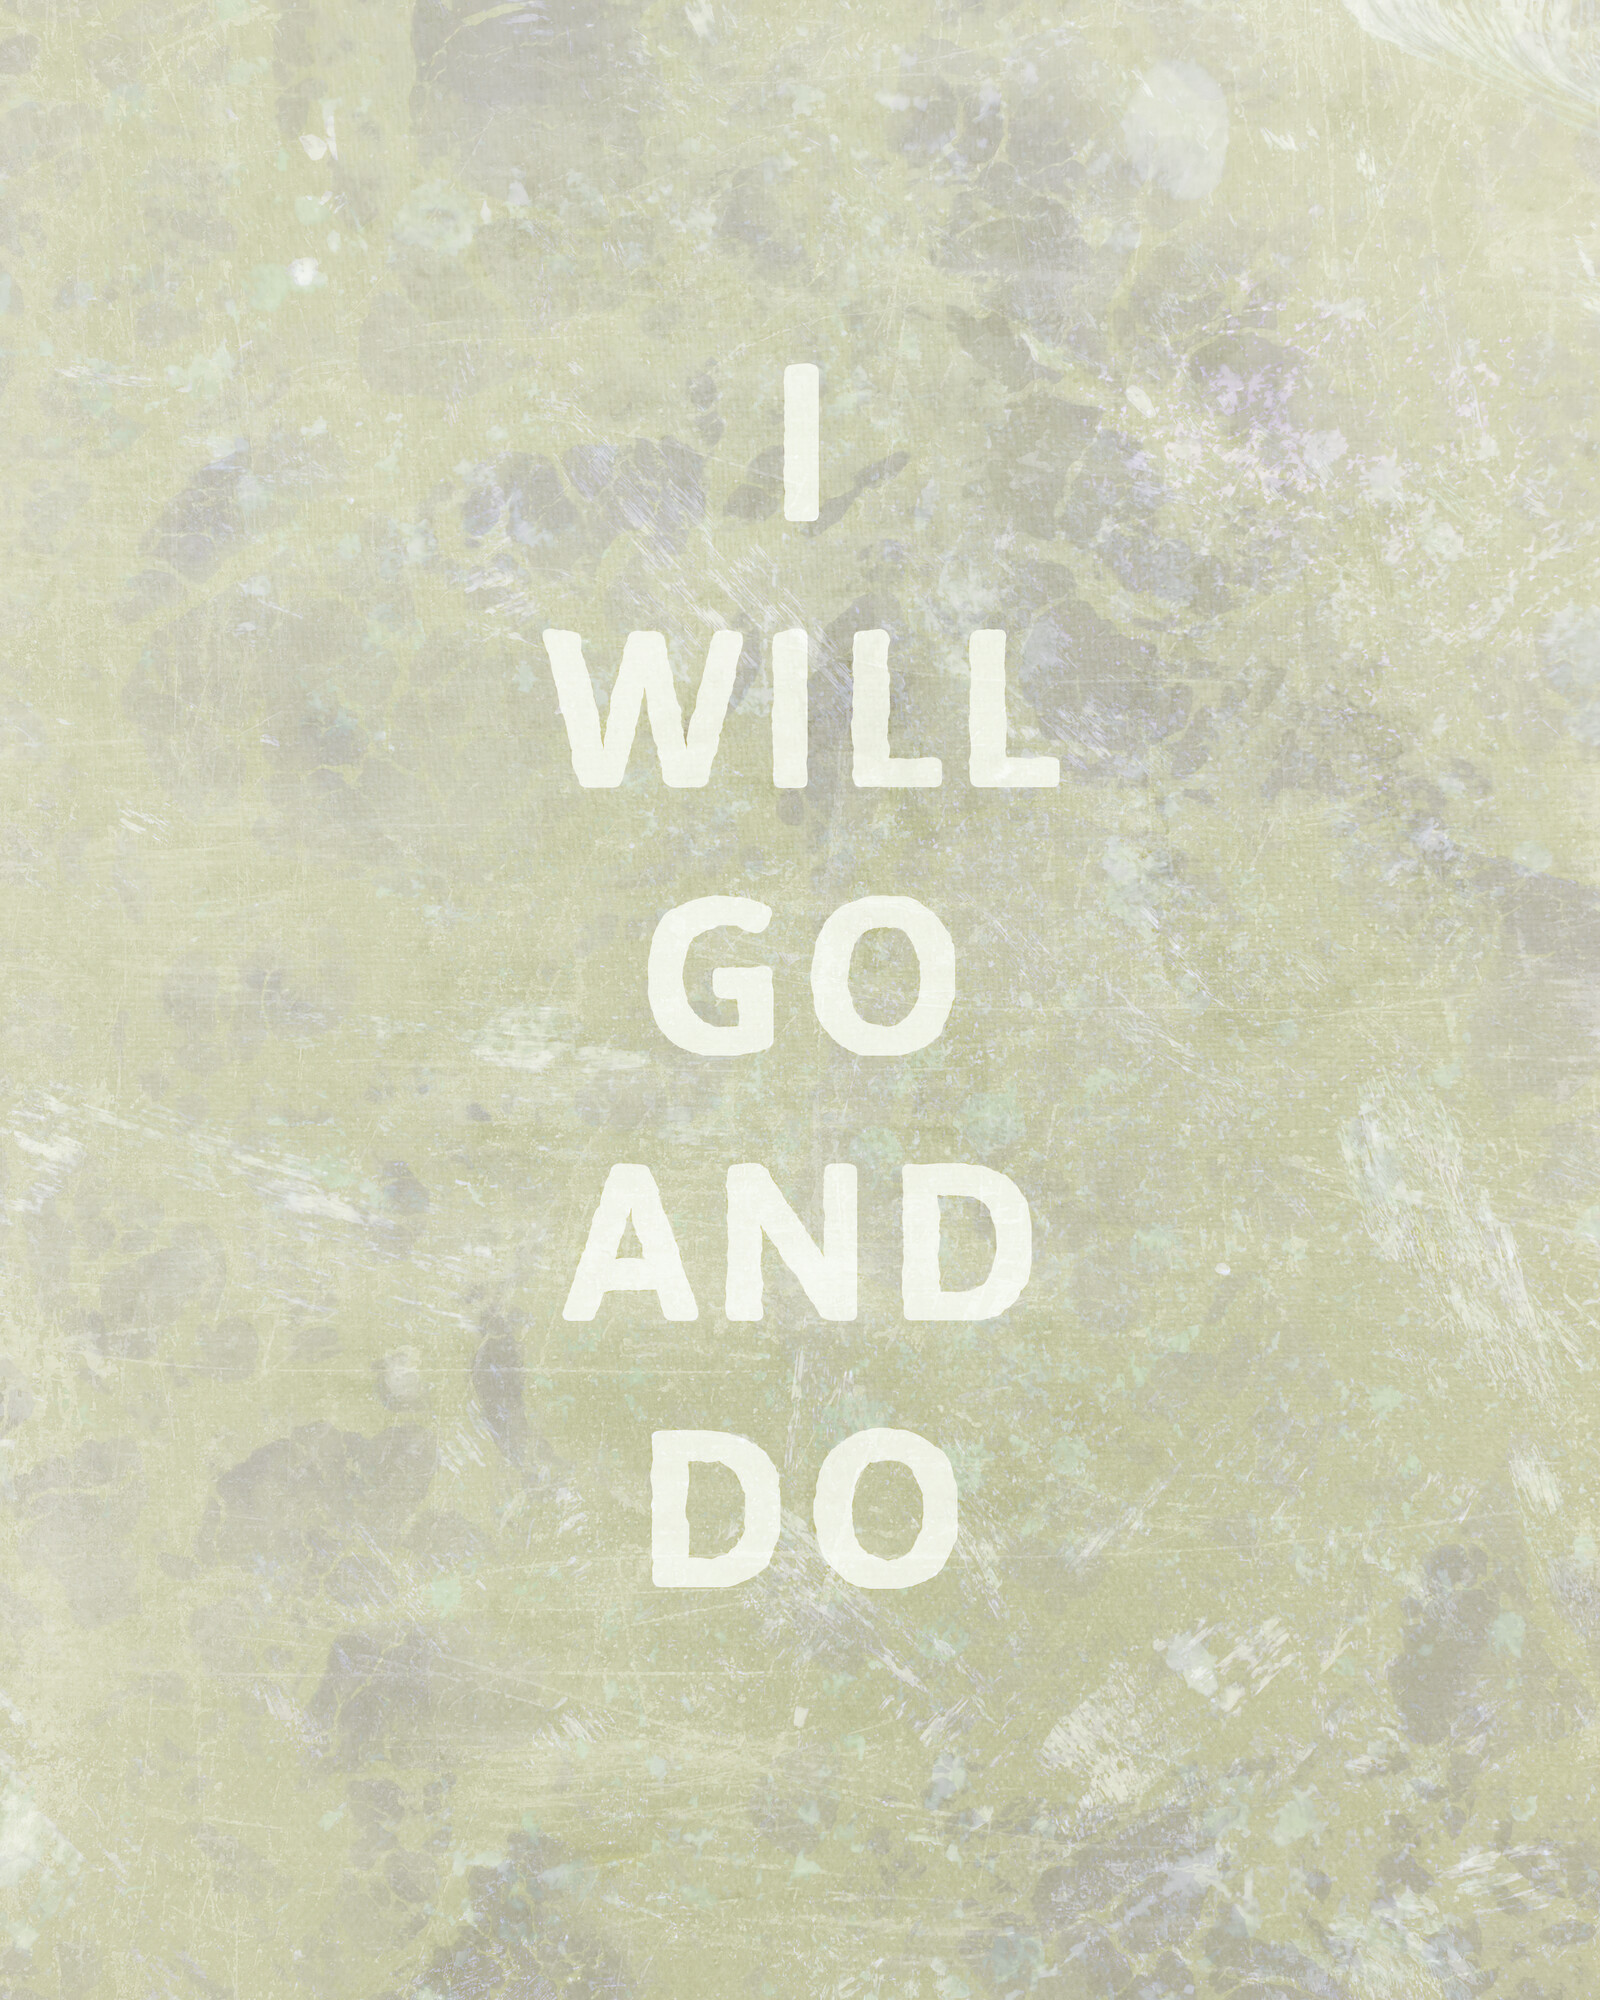 I will go and do